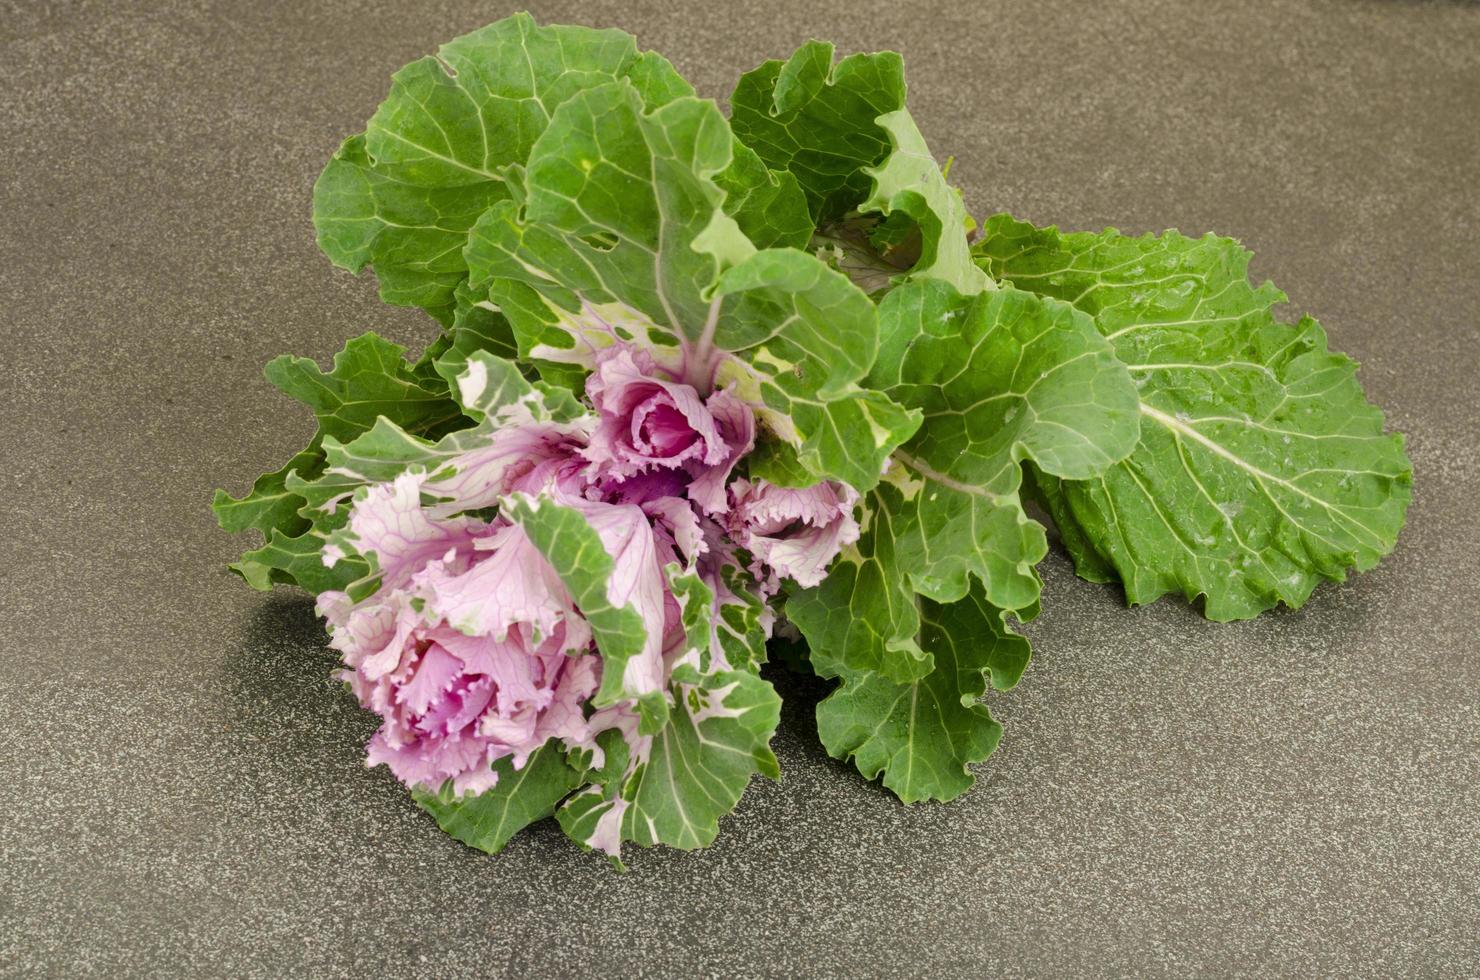 Decorative cabbage with purple flowers. Studio Photo. photo